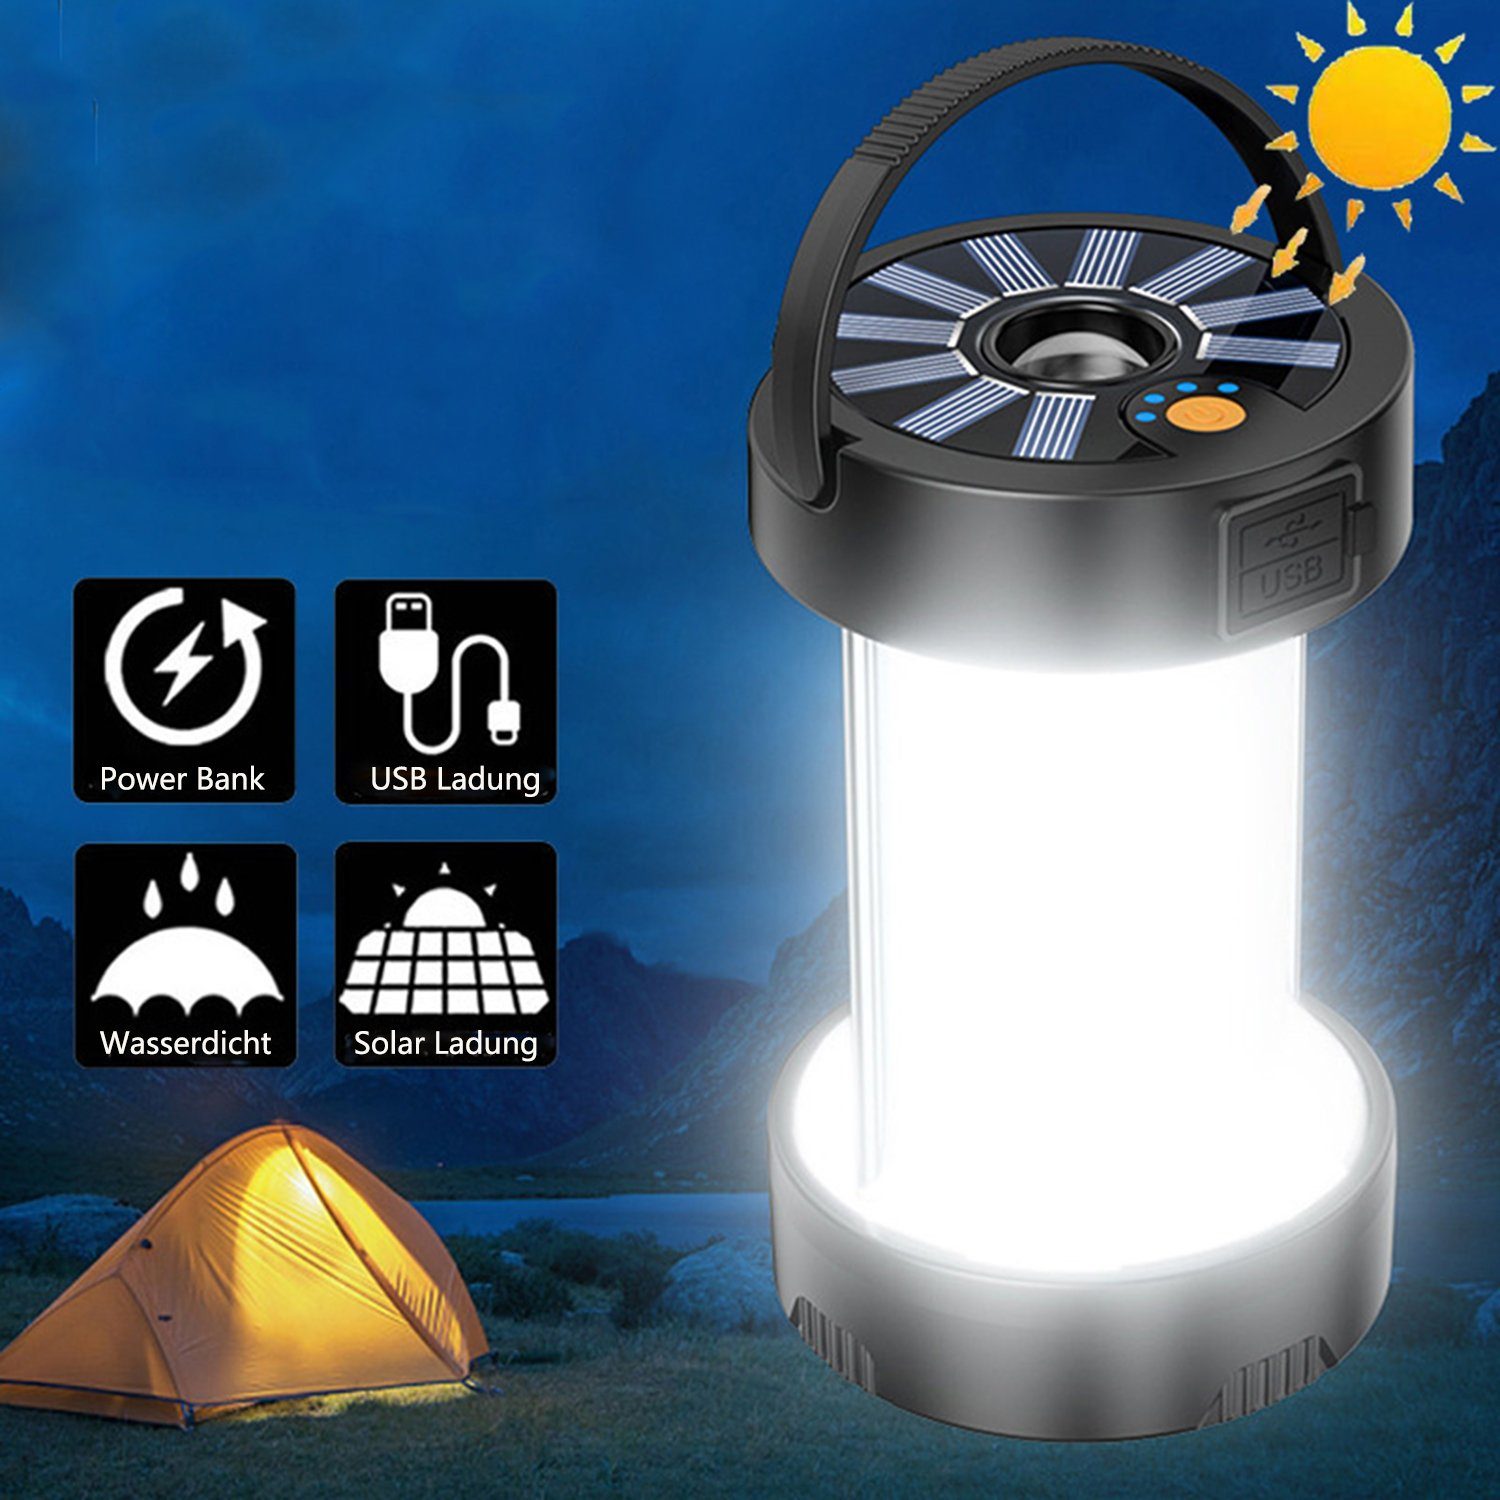 Vicbuy LED Laterne »Solar Campinglampe, Camping Laterne, Magnet  Campingleuchte«, Solarlaterne, 4 Beleuchtungsmodi, mit 1800mAH Akku,  Wasserdichte Tragbare Camping Leuchte, Zeltlampe, 360° Beleuchtung